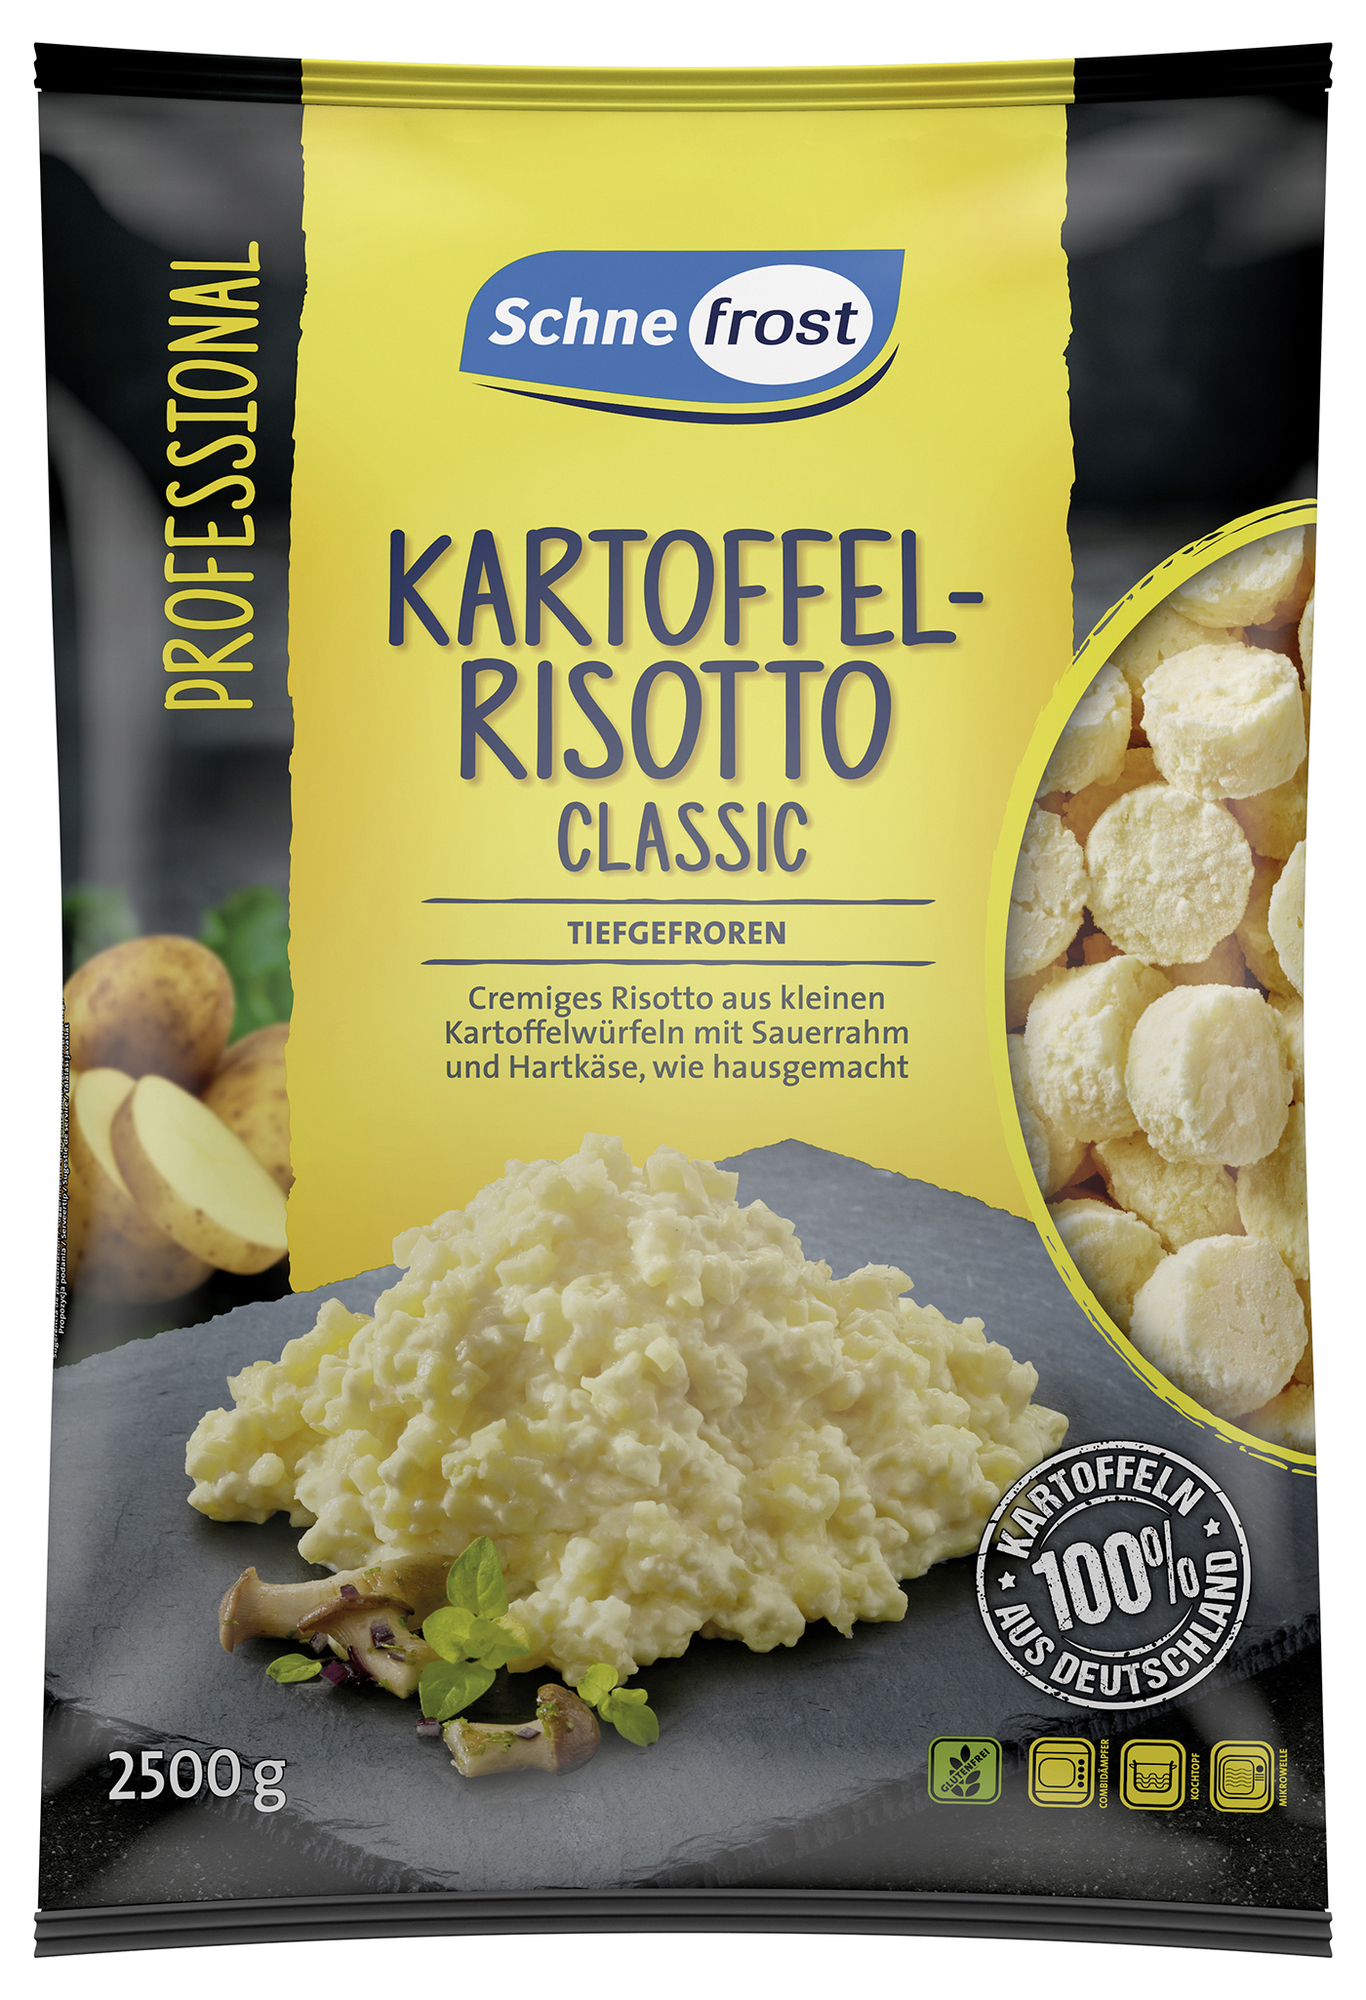 Kartoffel-Risotto Classic 2500g